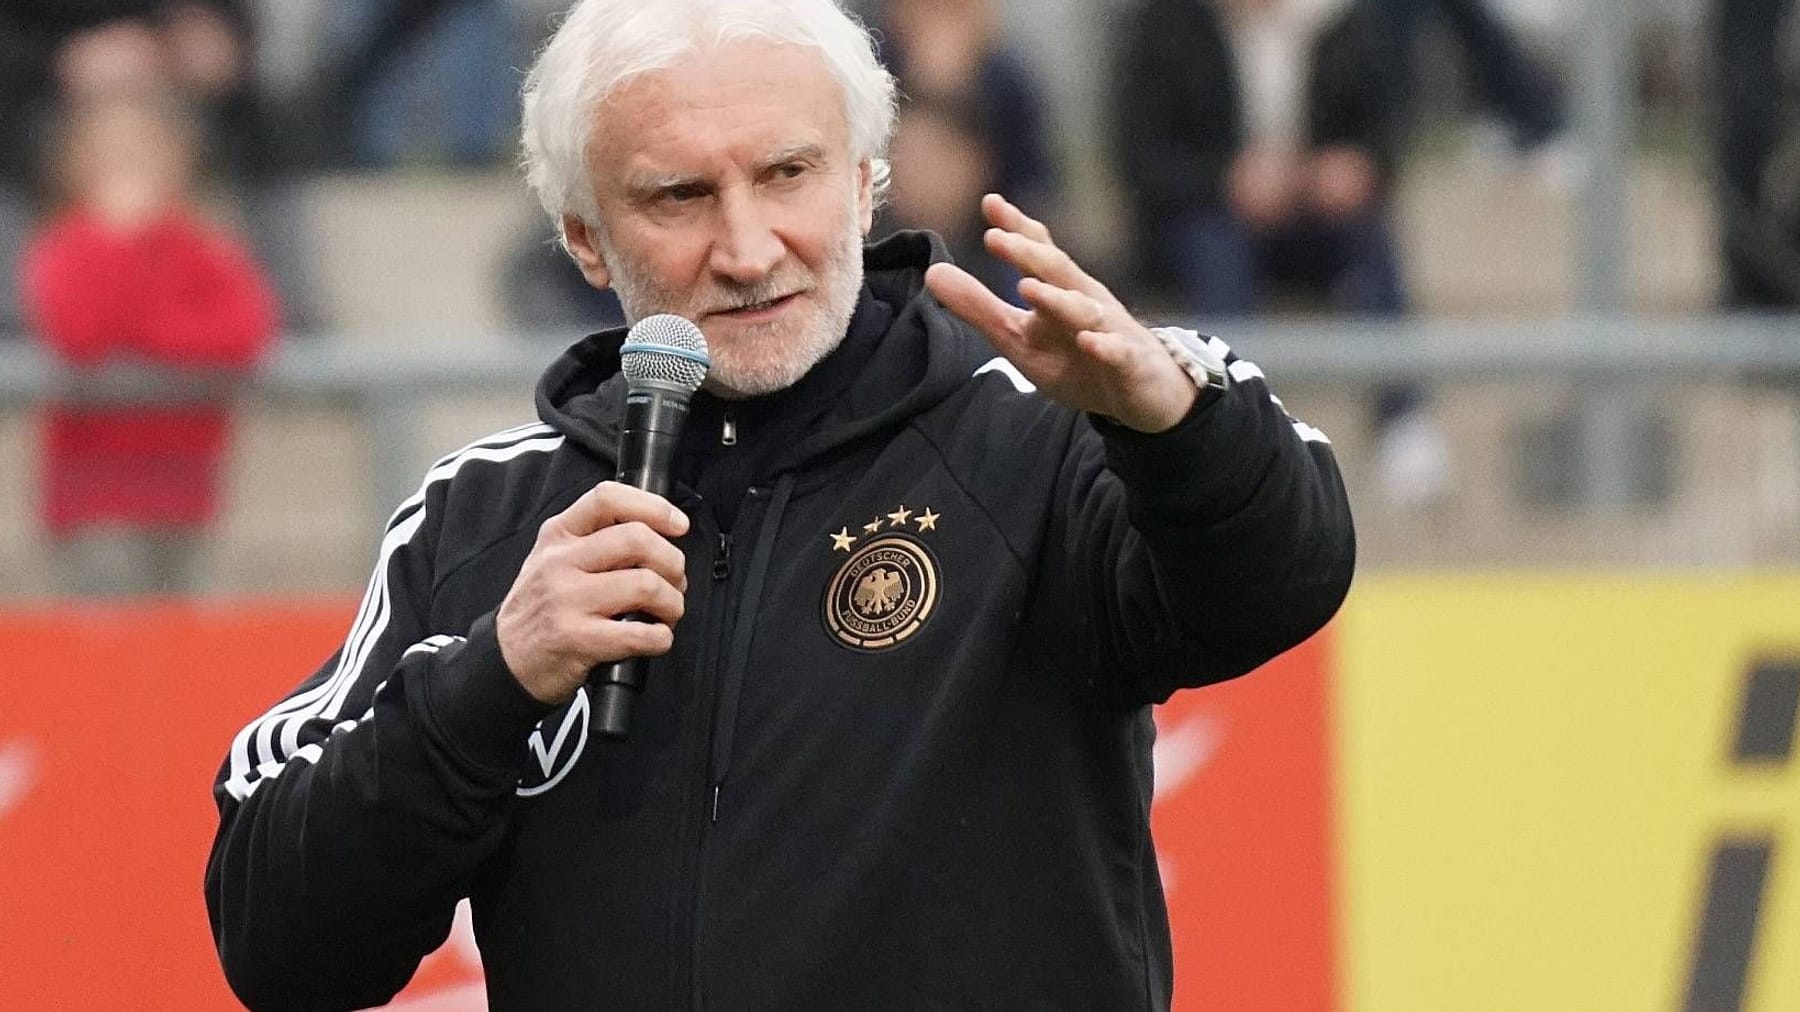 DFB-baas Rudi Völler miste de interland tegen België